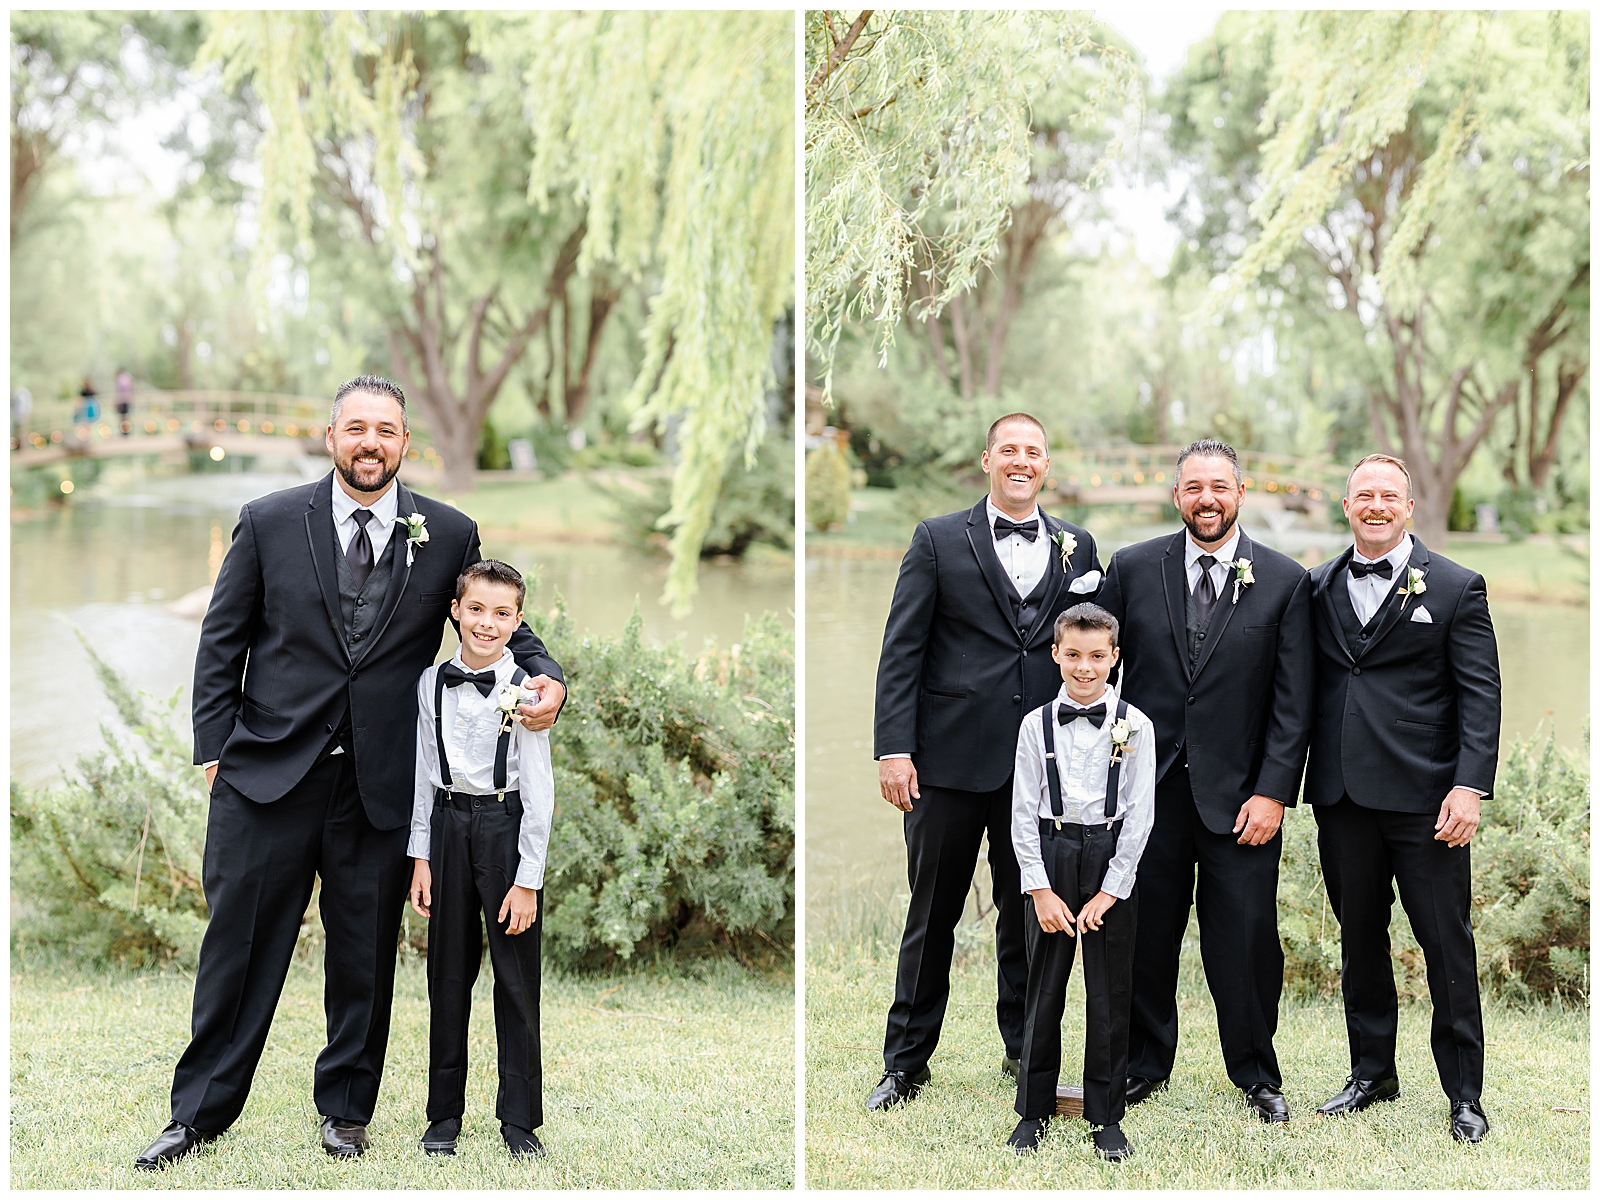 groomsmen in black suits standing together